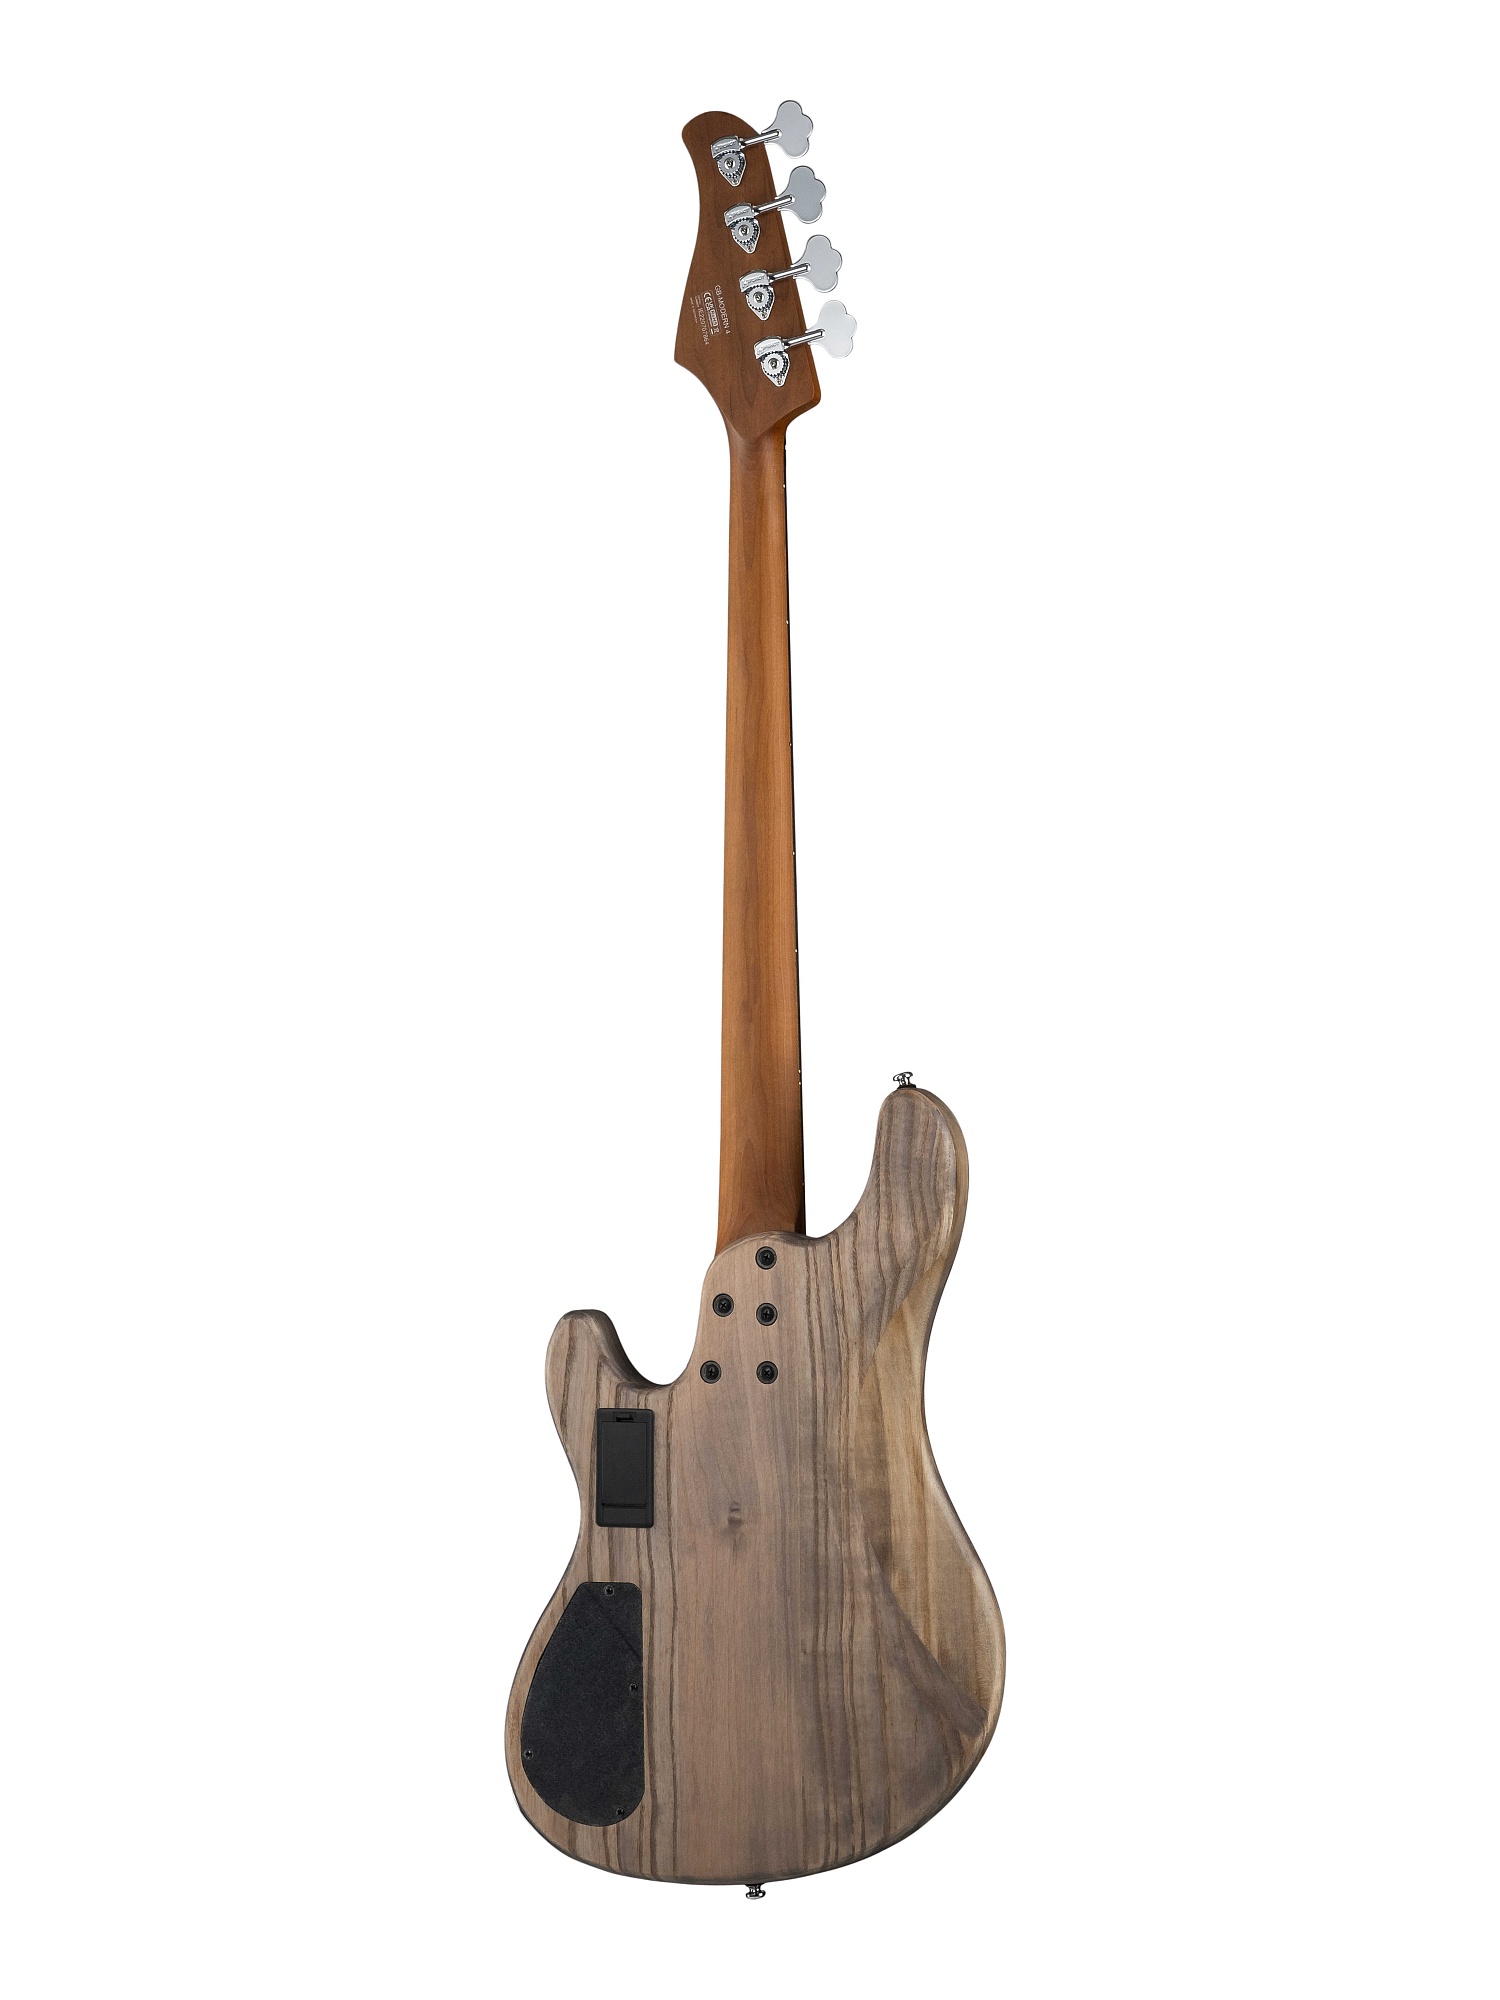 GB-Modern-4-OPCG GB Series Бас-гитара, серая, с чехлом, Cort купить в prostore.me